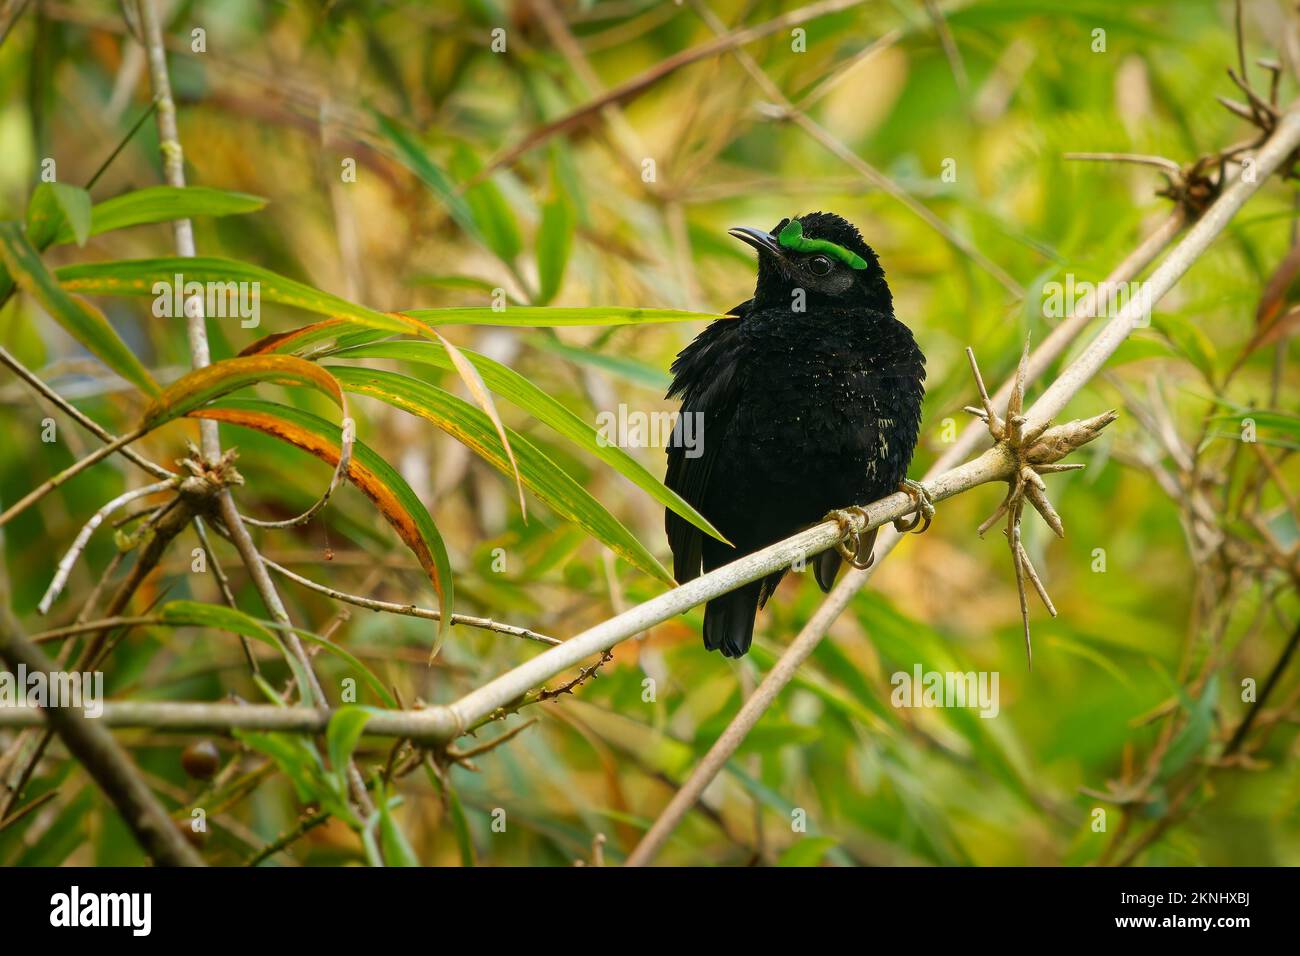 Asity de terciopelo - Philepitta castanea pájaro negro con la ceja verde de la familia Philepittidae, endémica de Madagascar, subtropical o tropical húmedo lo Foto de stock